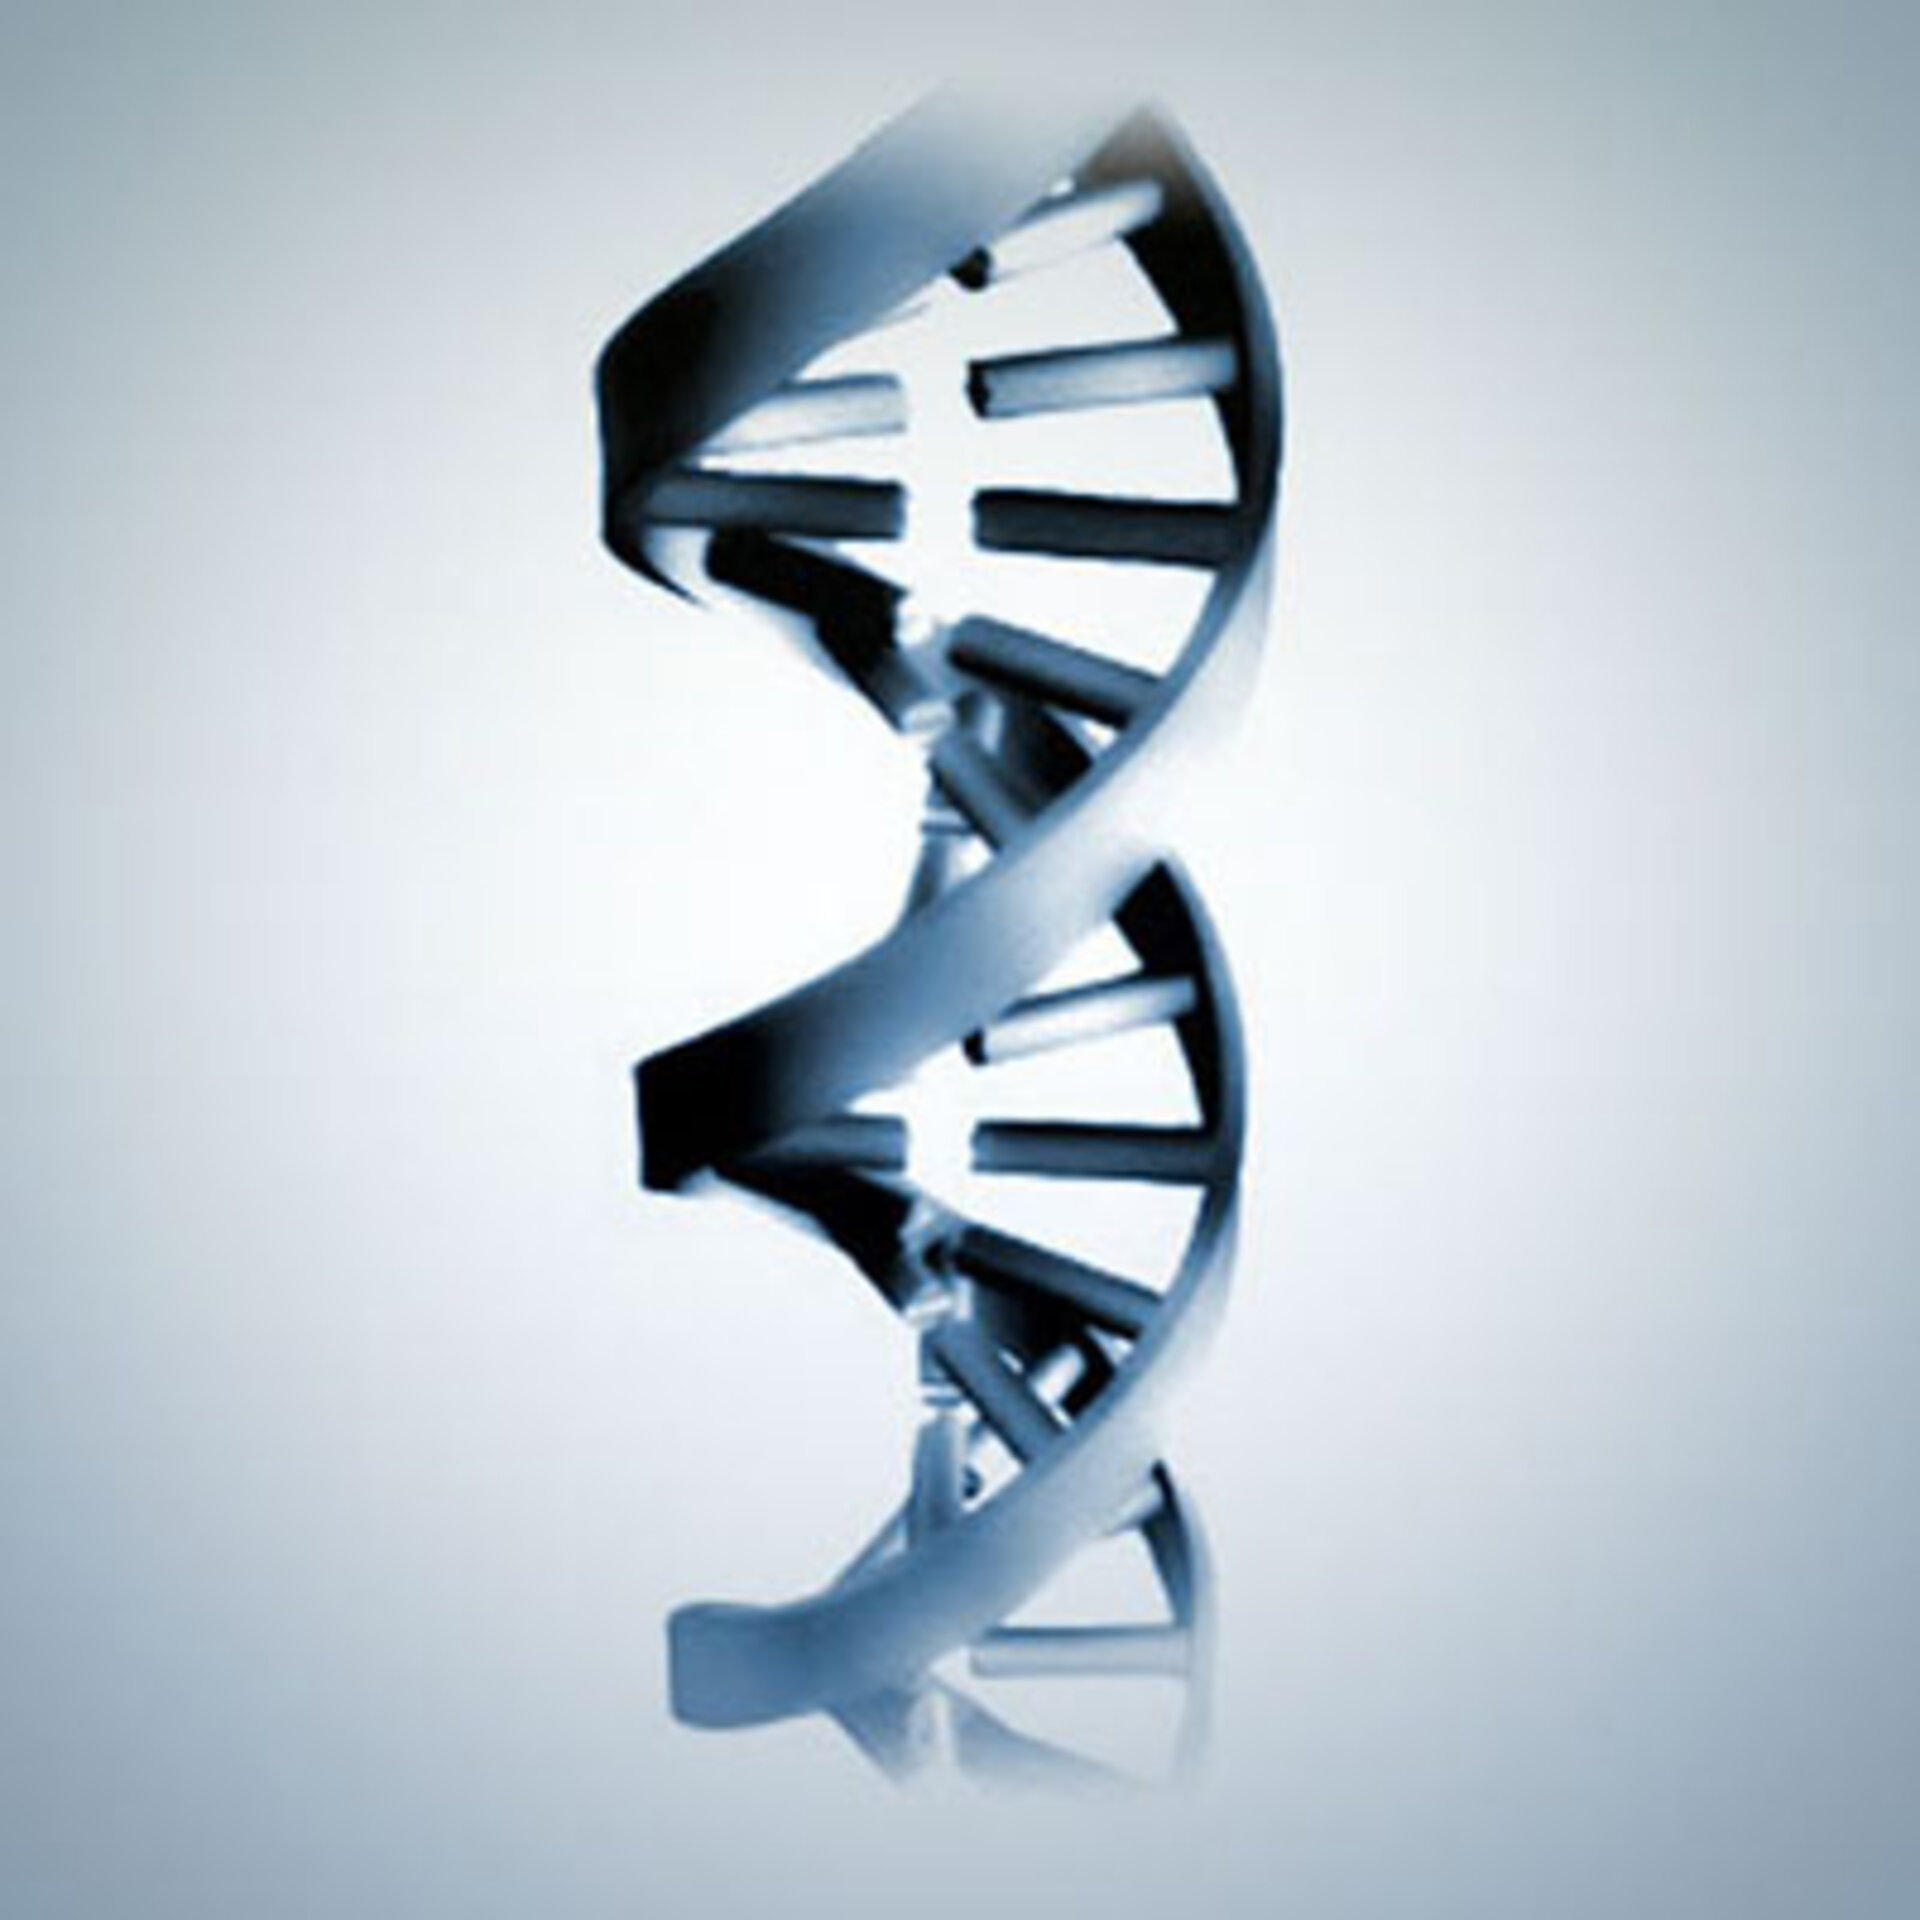 DNA's famous double-helix structure